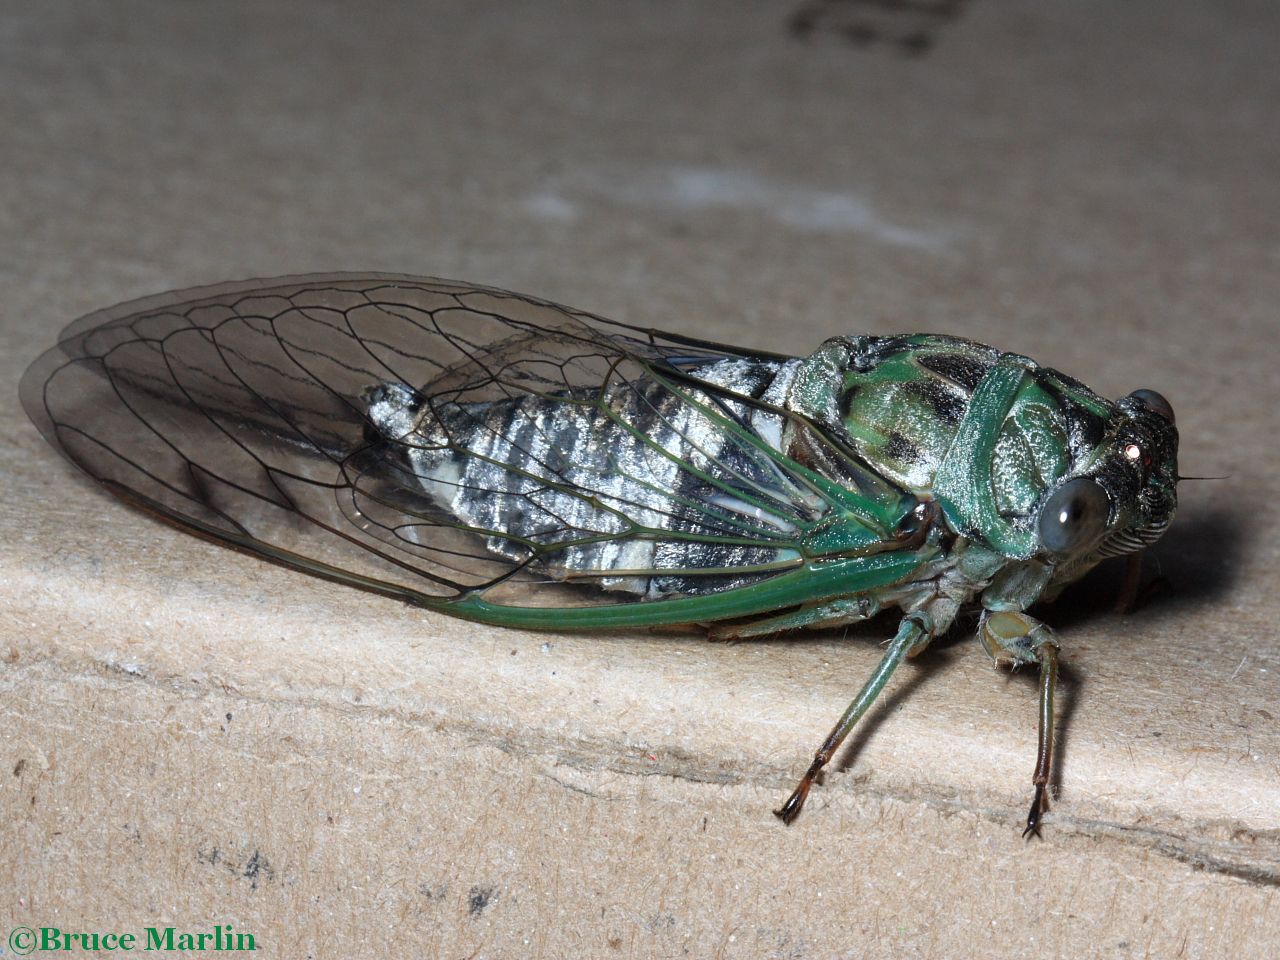 Newly-emerged periodic cicada